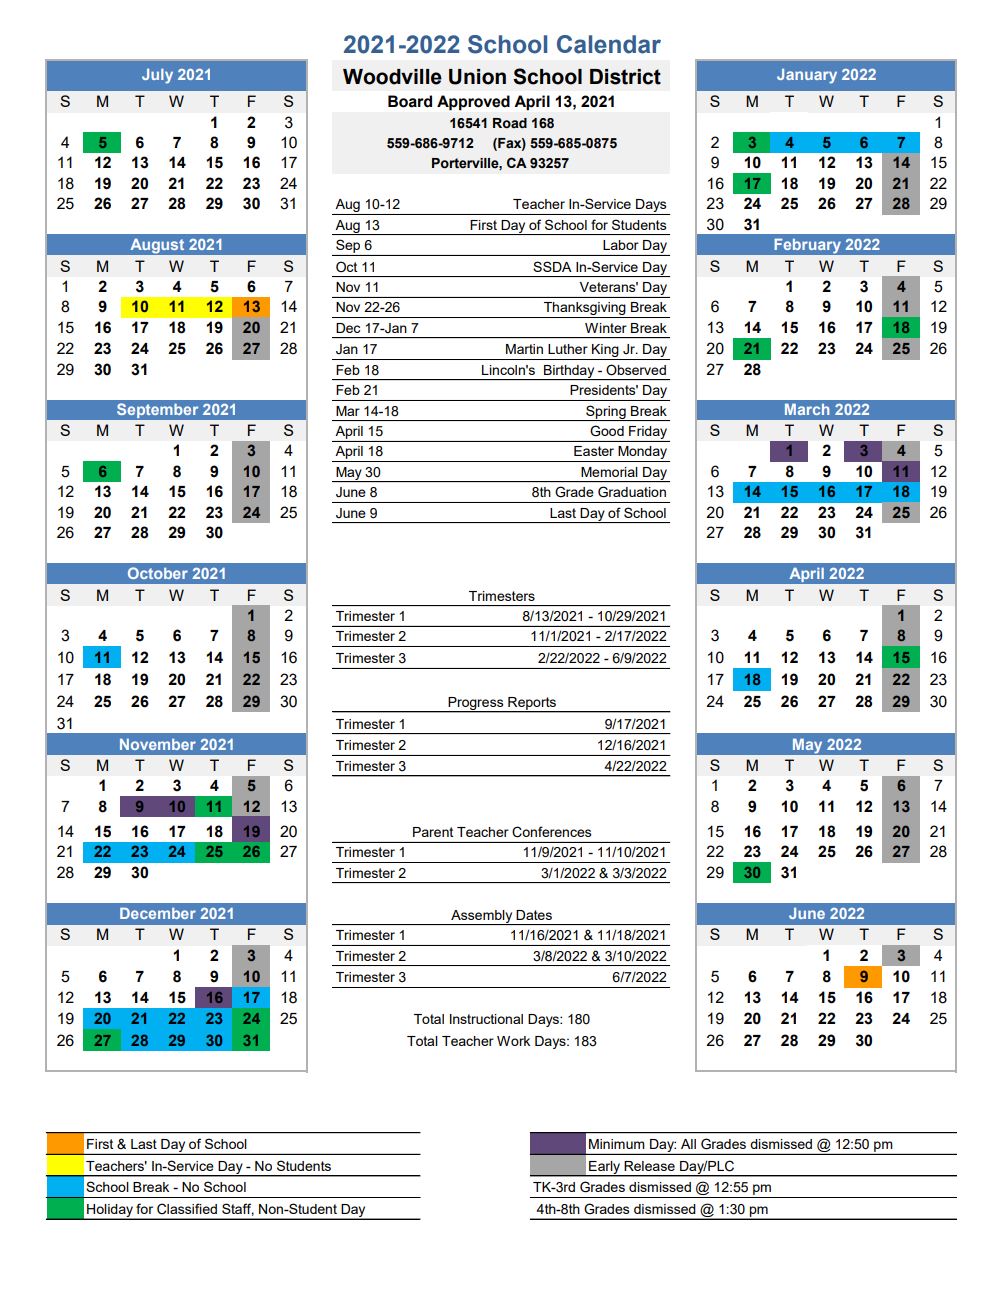 Calendar-2021-2022-Picture